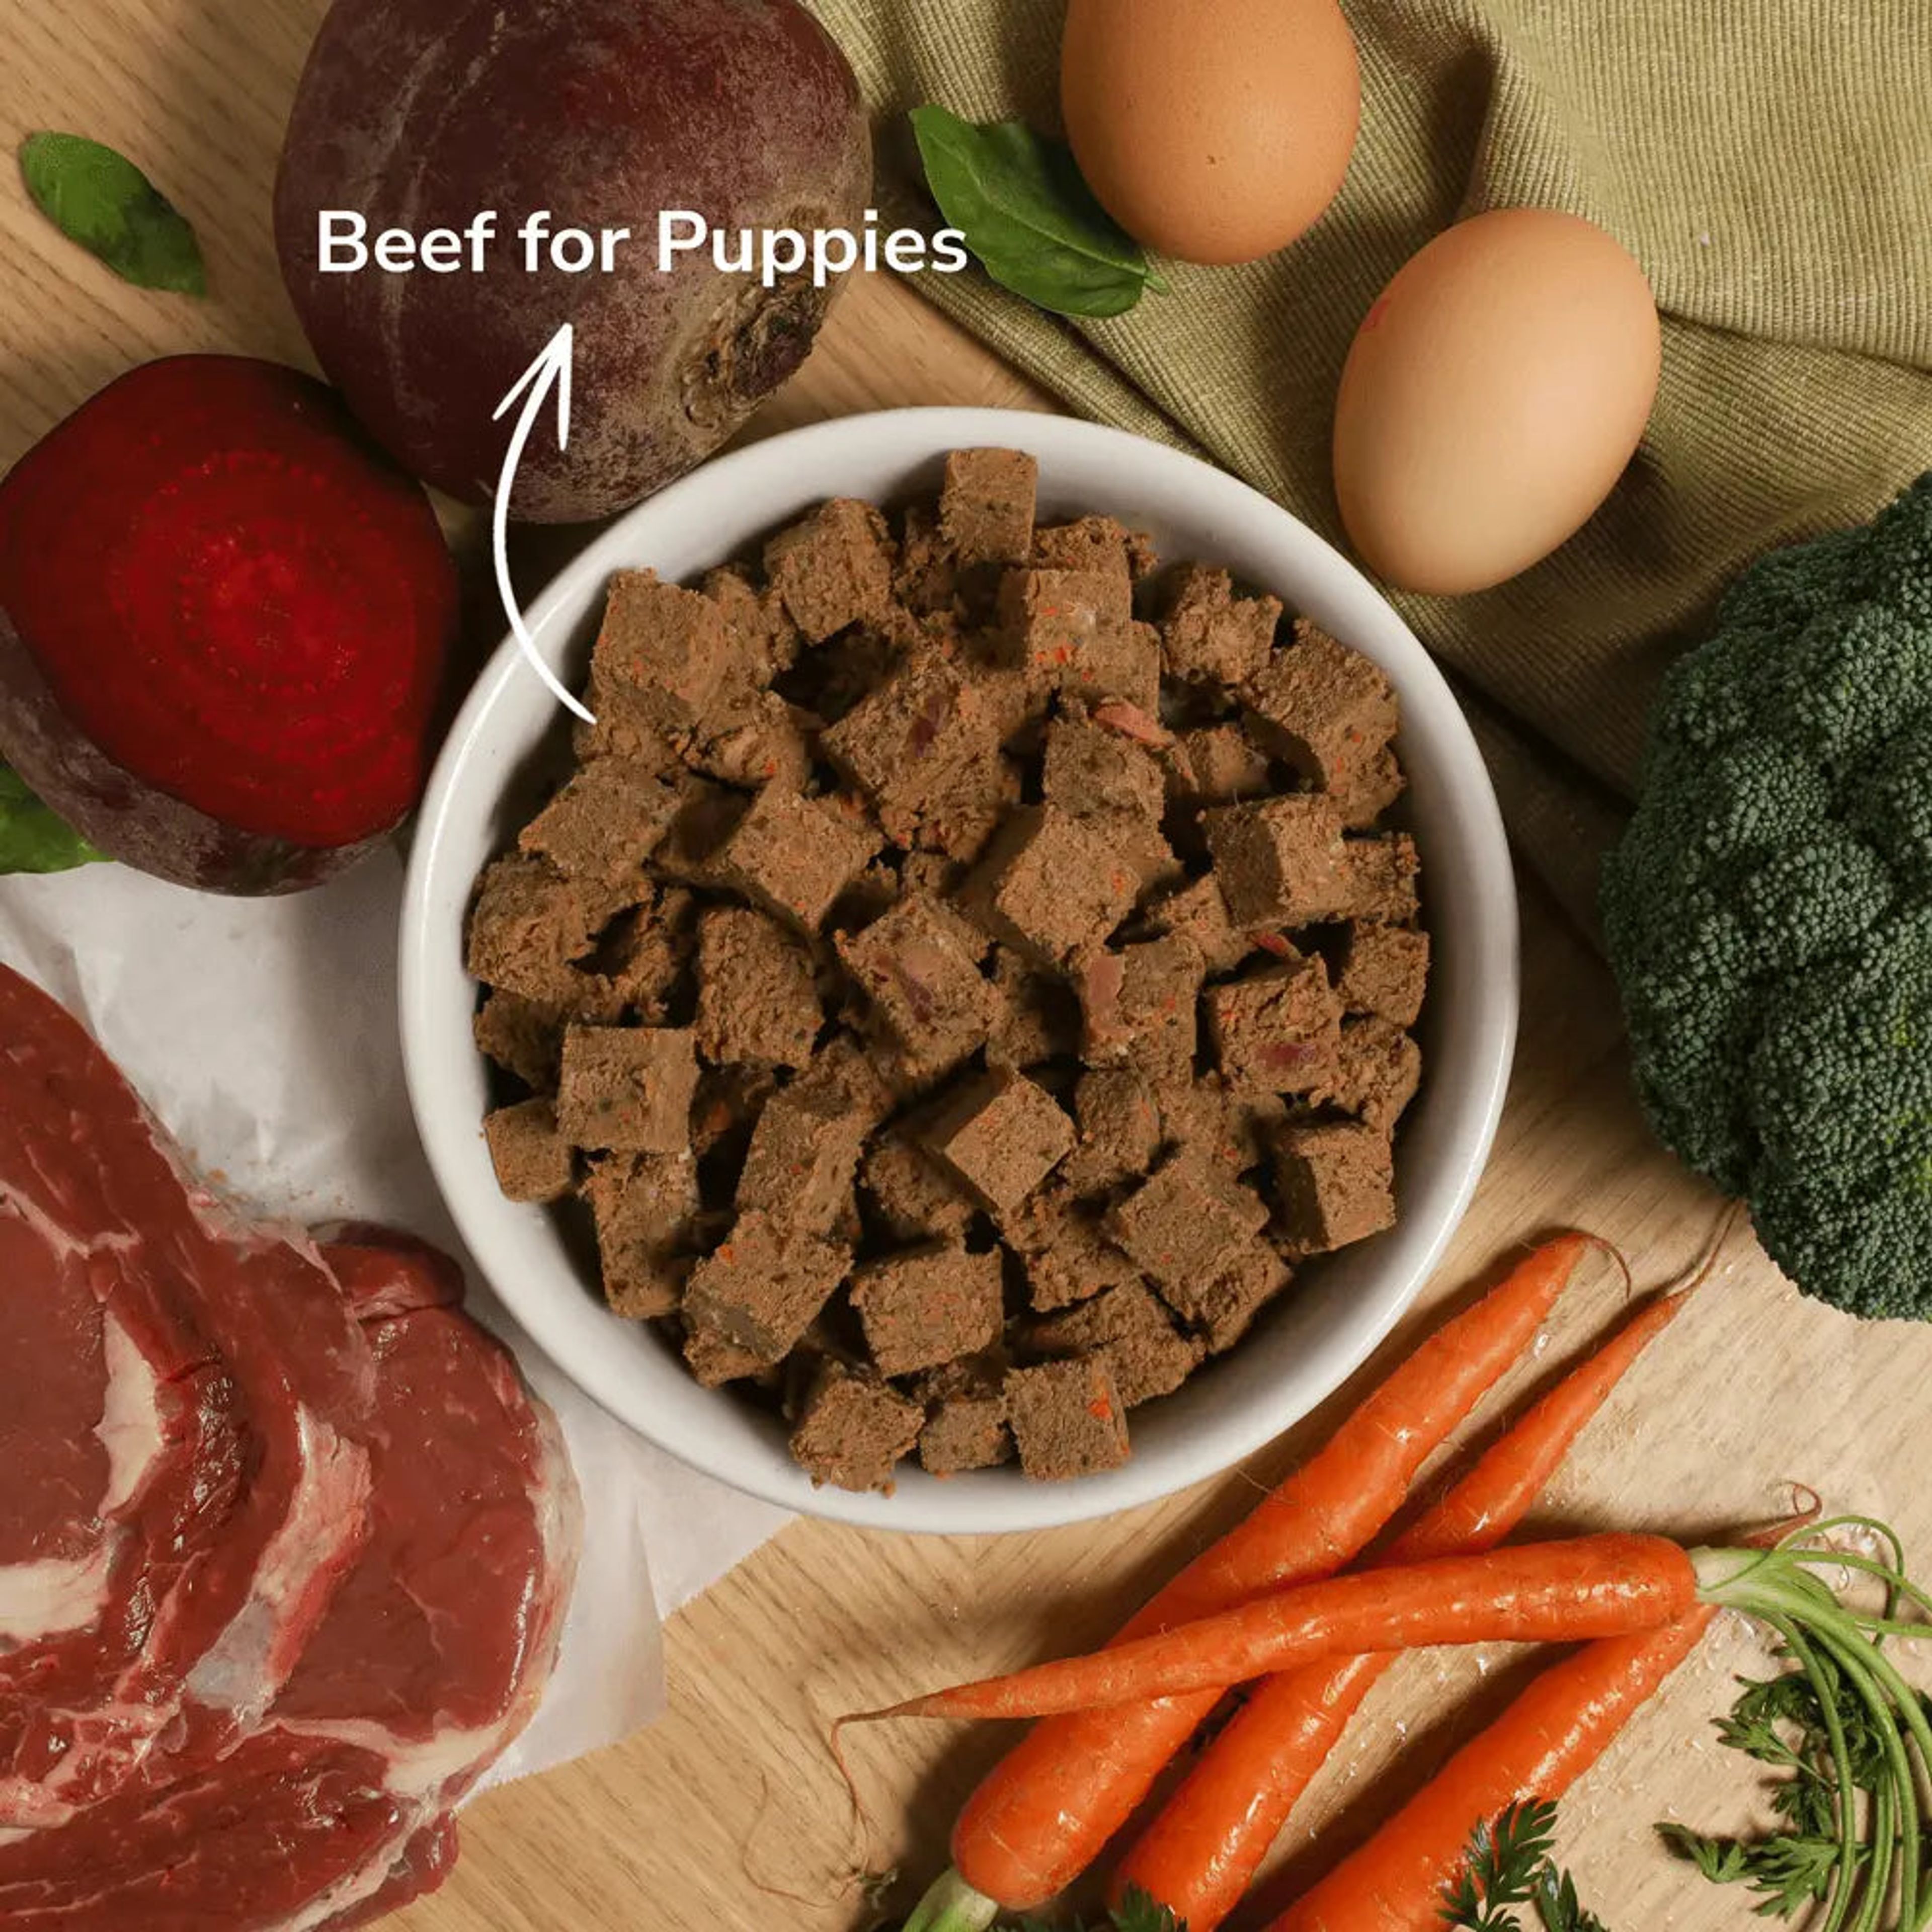 Puppy Taster Pack - Beef